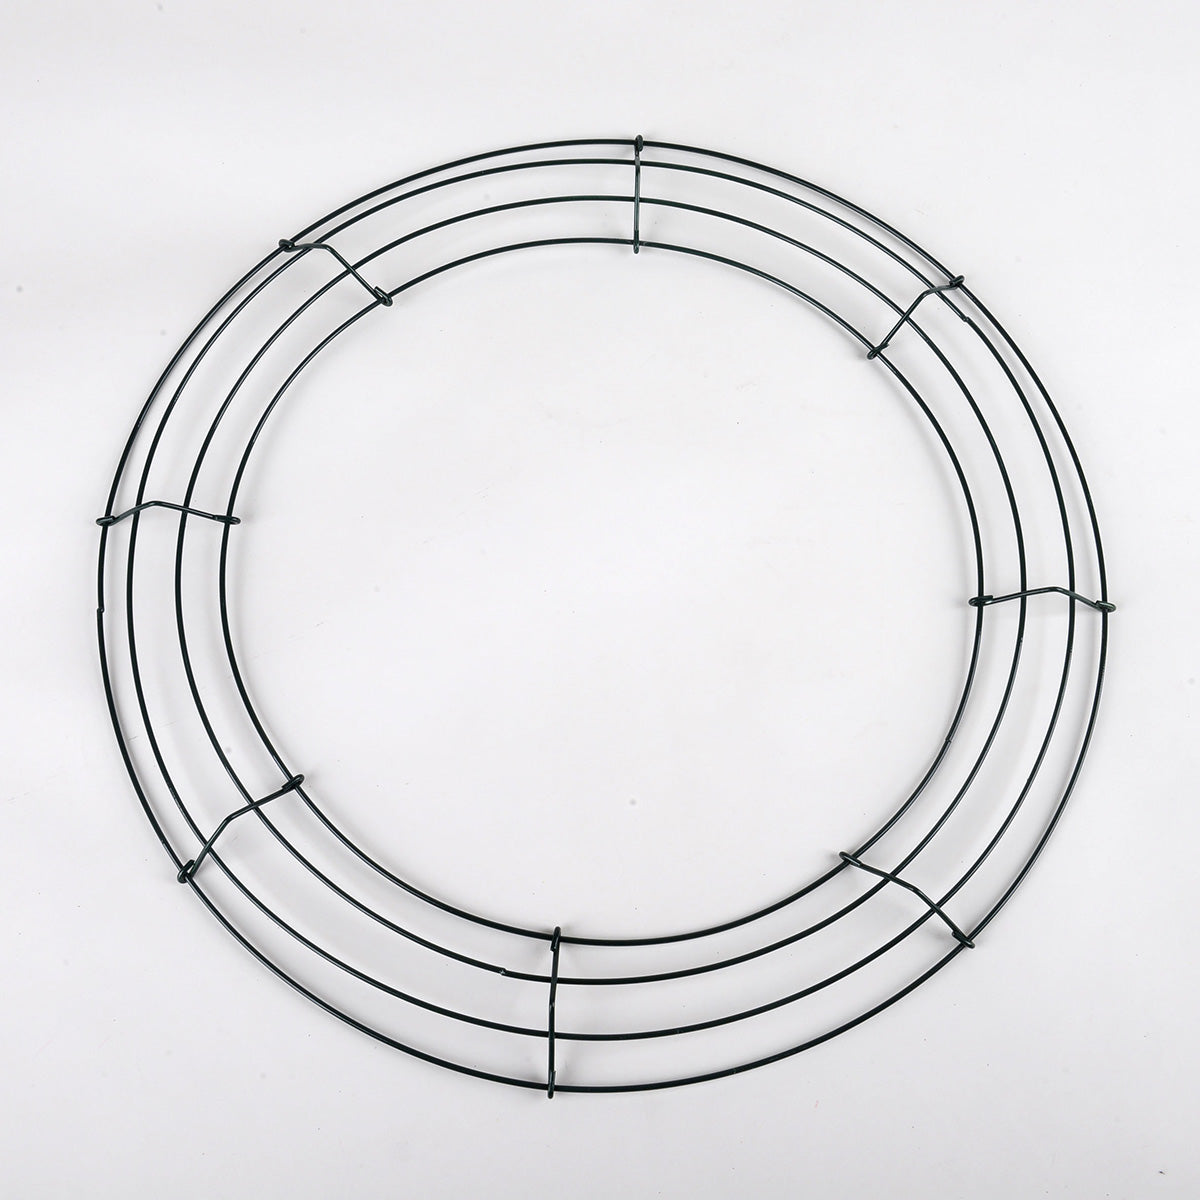 14-inch Wreath Wire Frames - Bundle of 10pcs